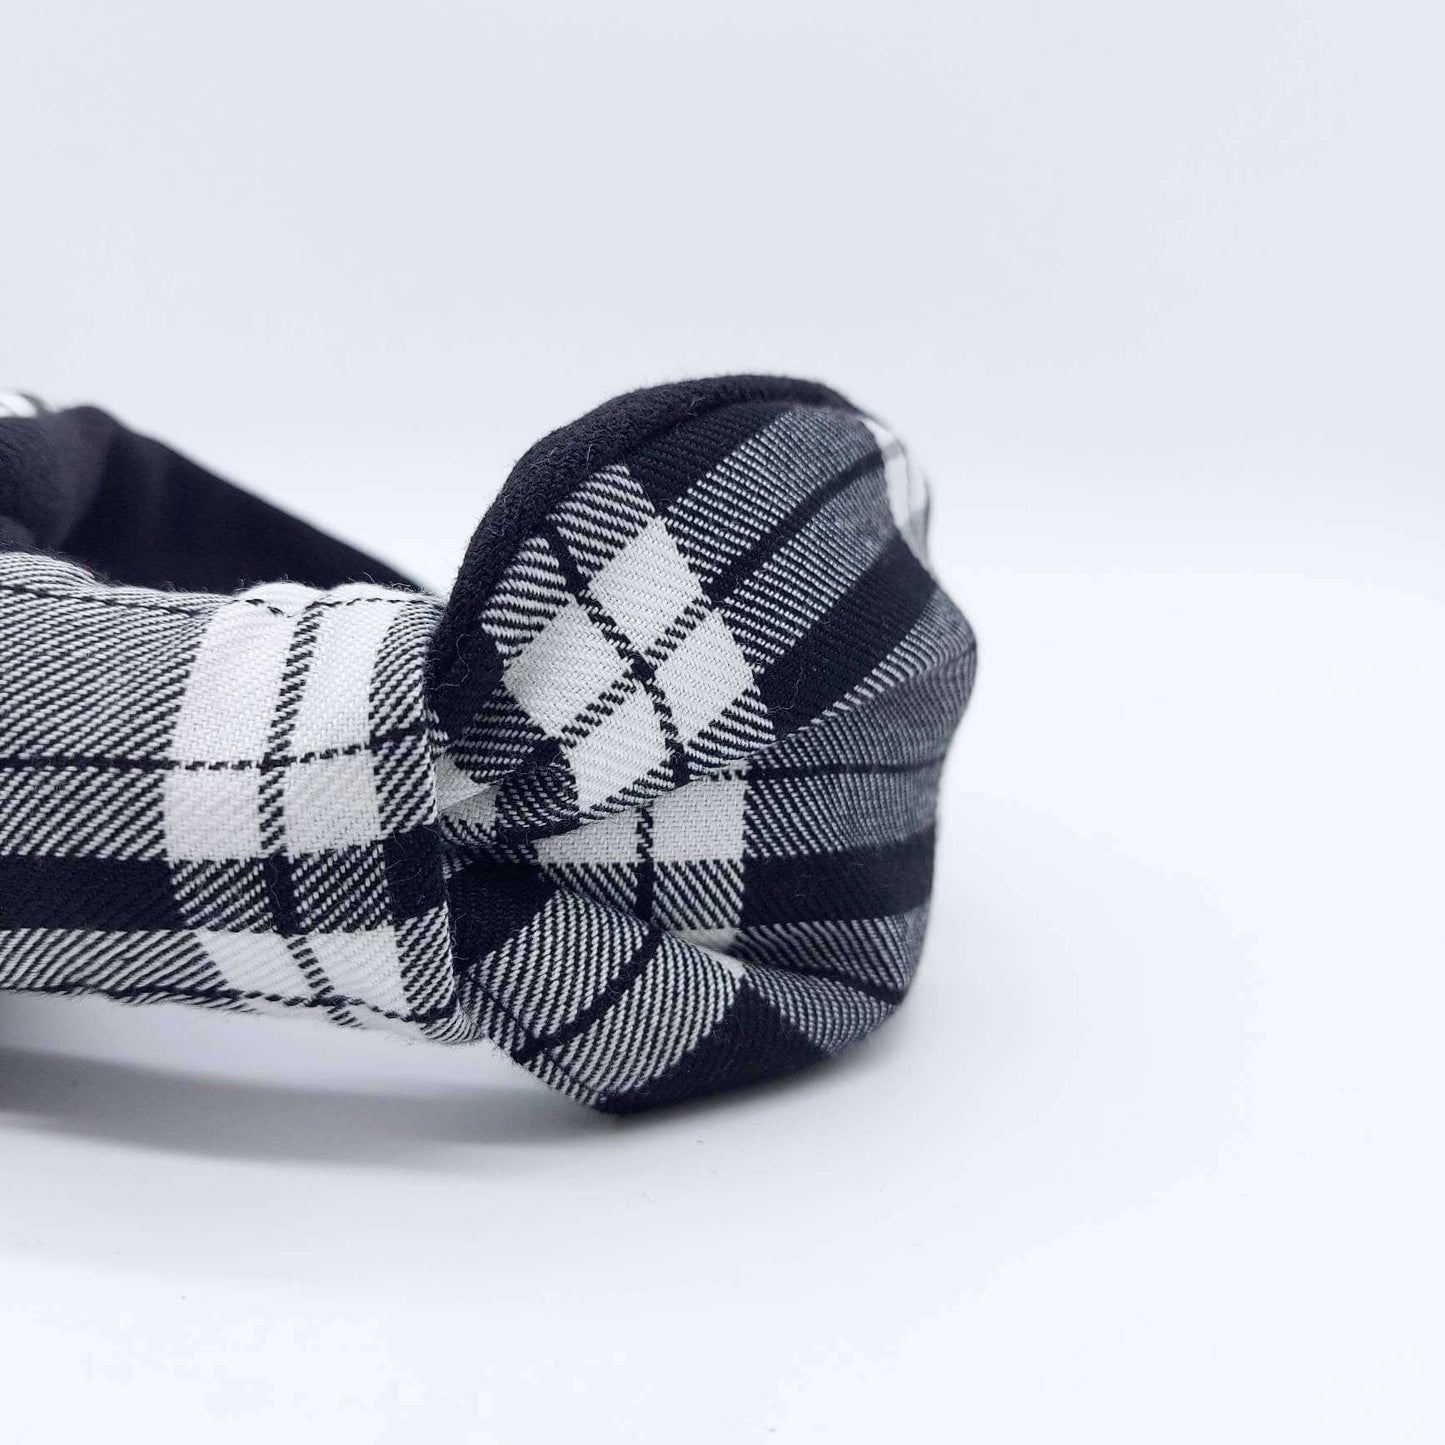 A bow-style, black and white, tartan plaid fabric headband with plain black lining underneath.